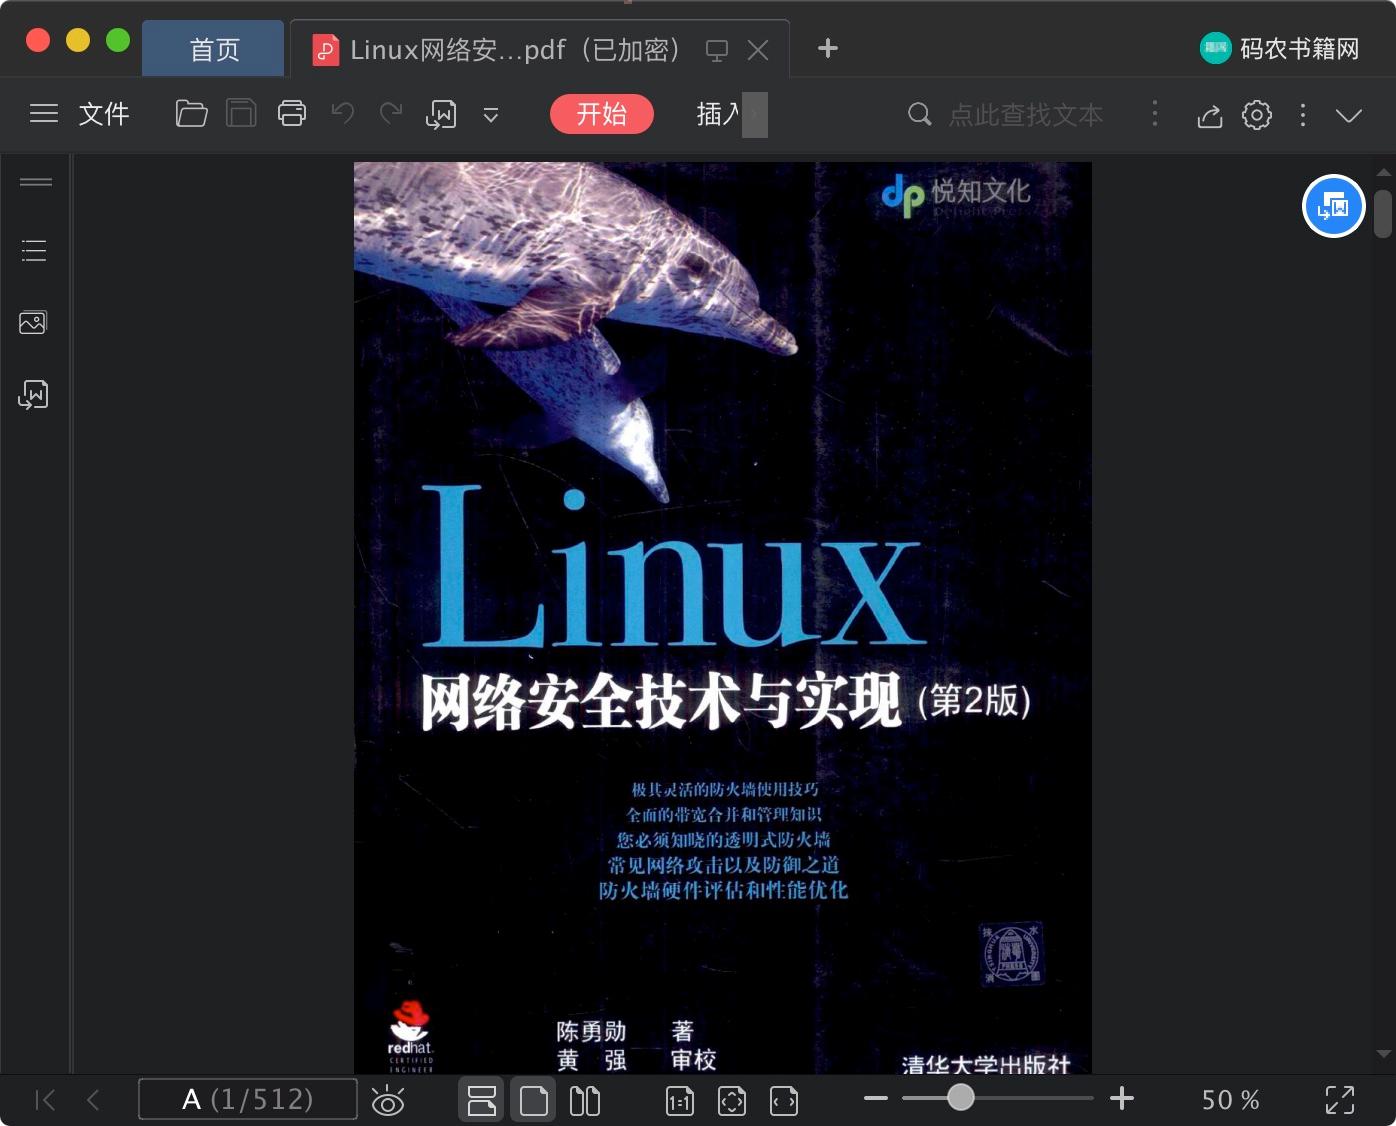 Linux教程网络安全技术与实现pdf电子书籍下载百度网盘